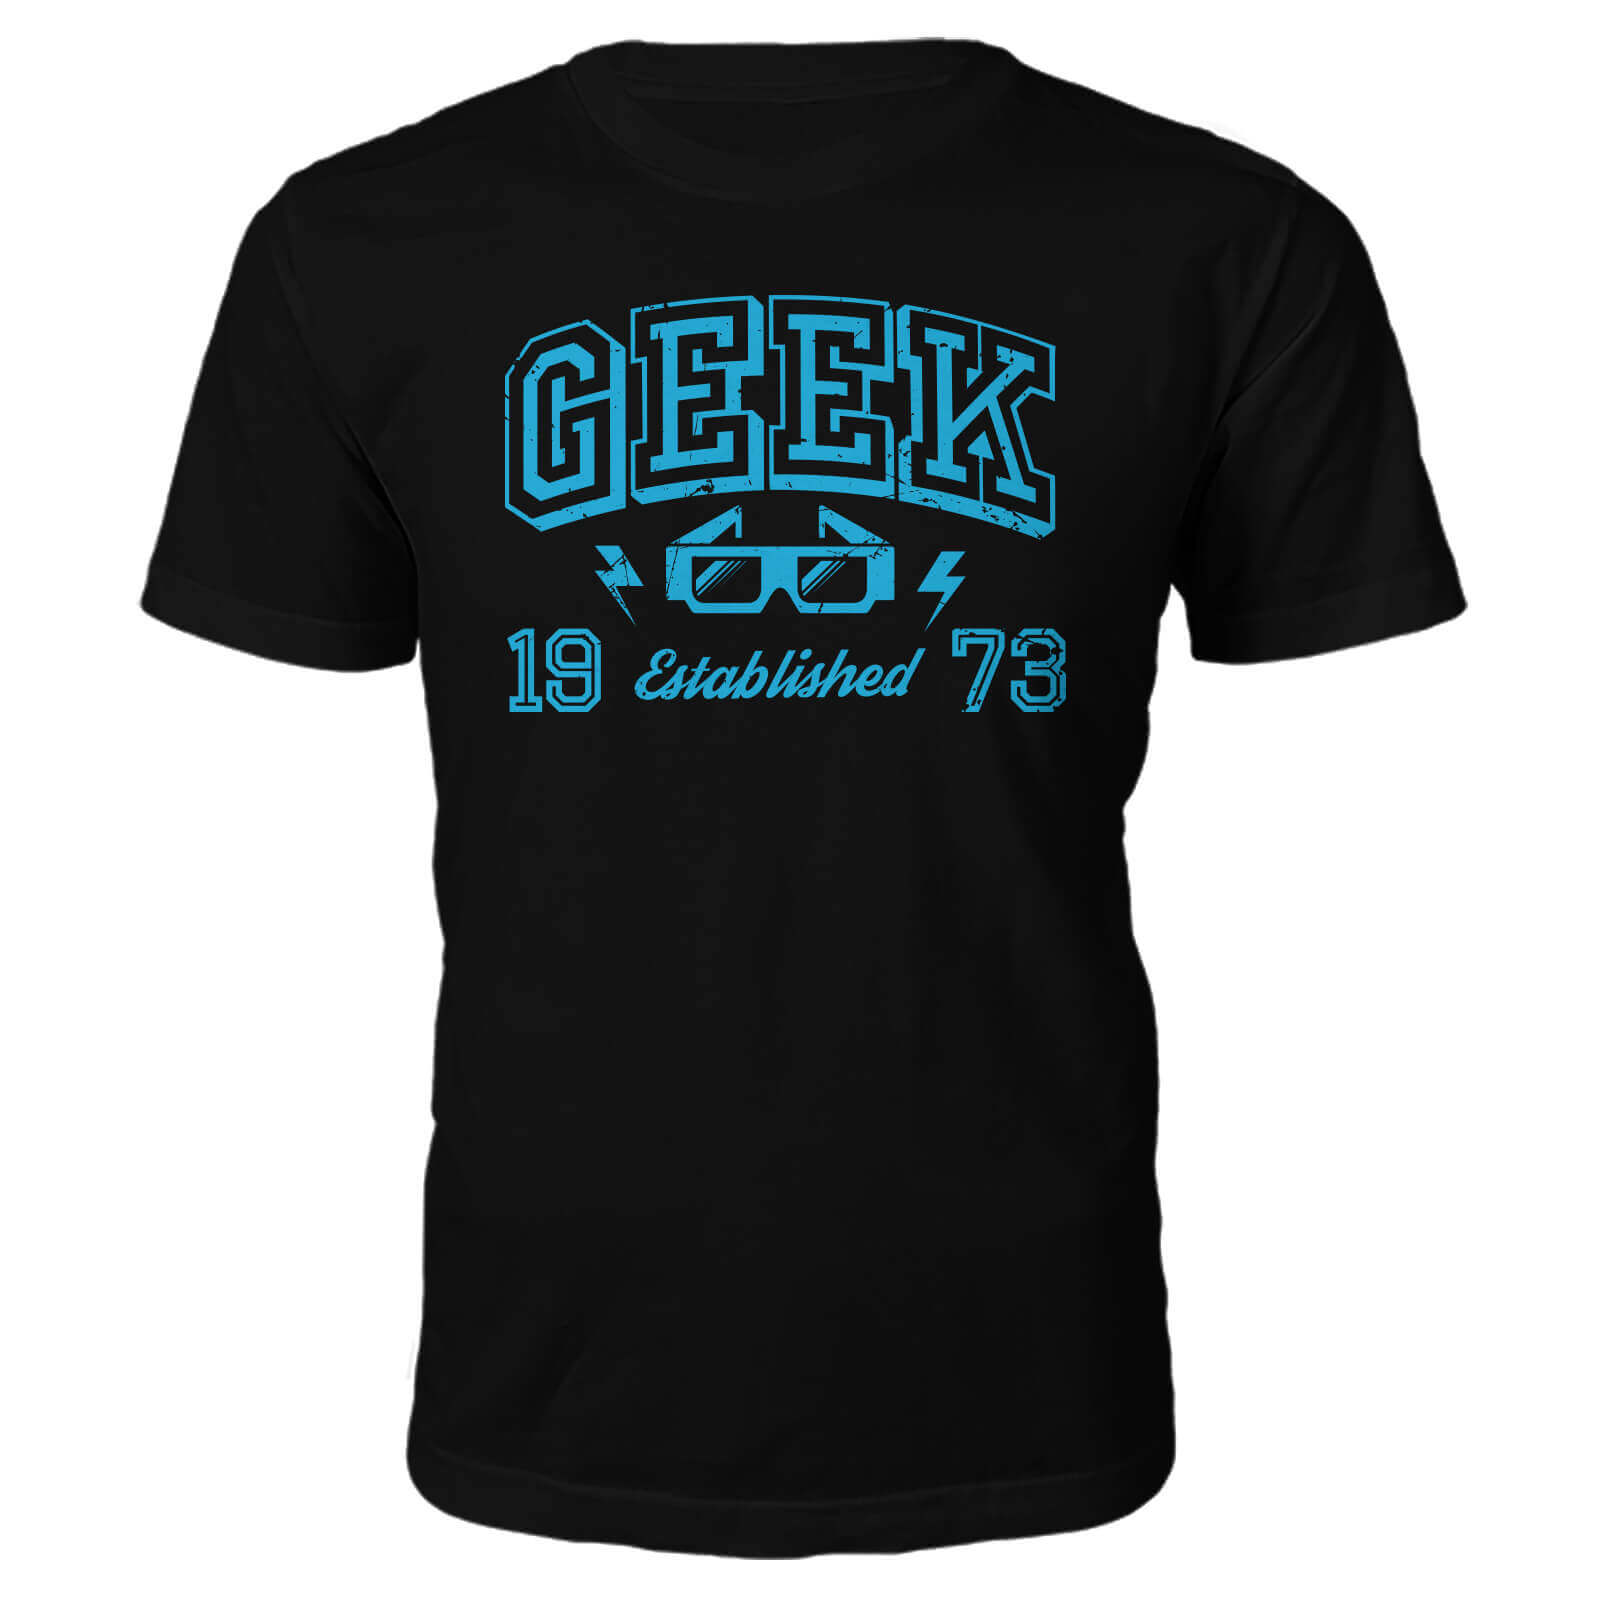 Geek Established 1970's T-Shirt- Black - M - 1973